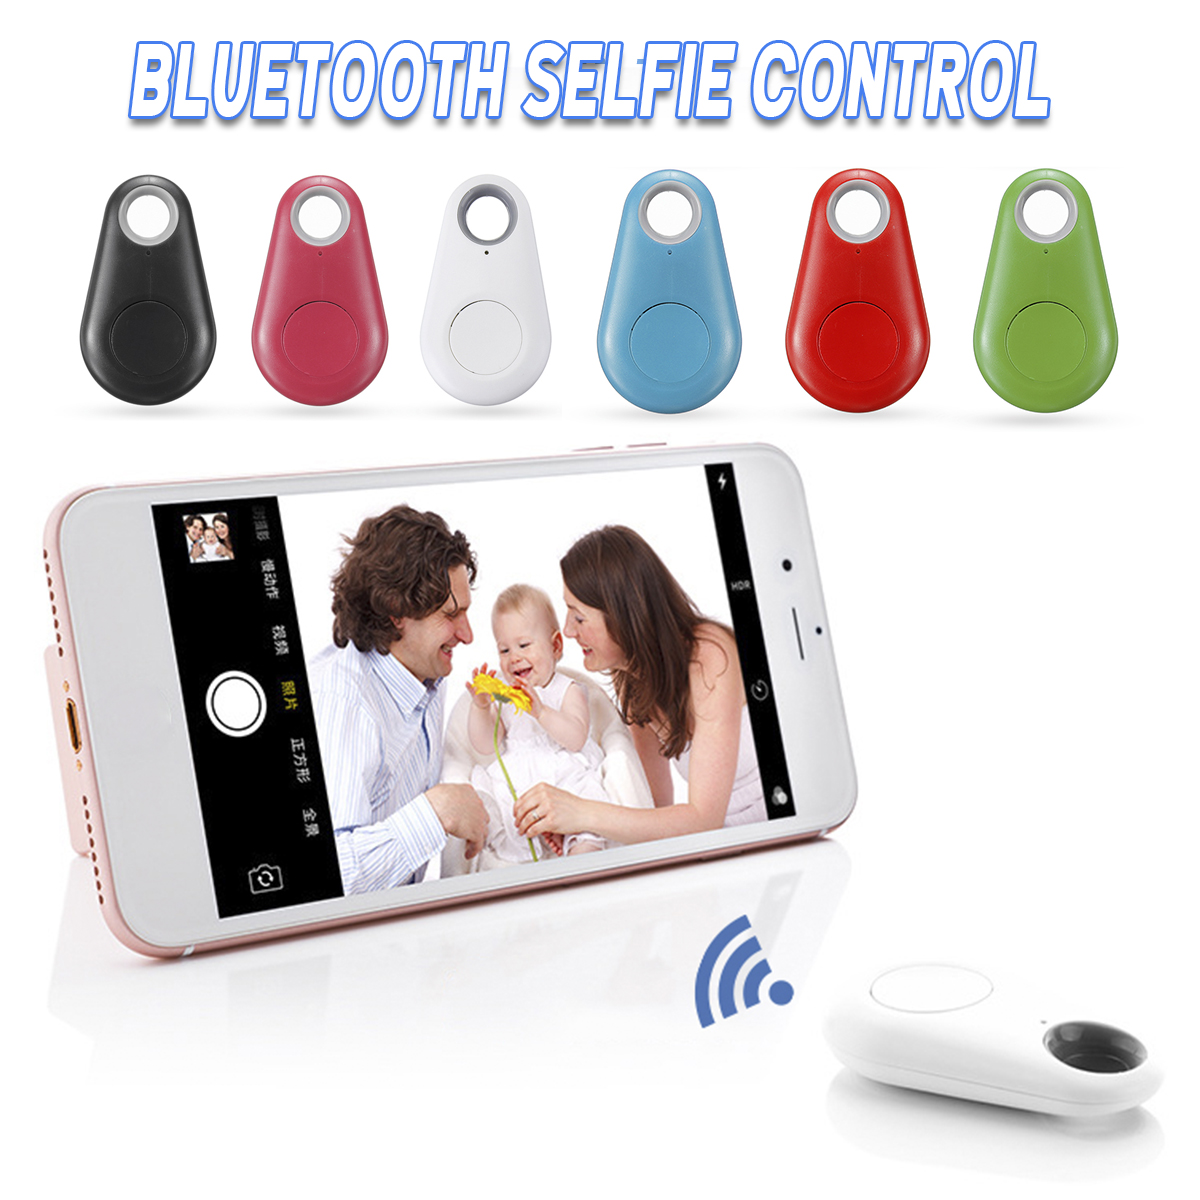 Universal-Portable-Mini-Wireless-bluetooth-Selfie-Control-Self-timer-Remote-Controller-1535089-3